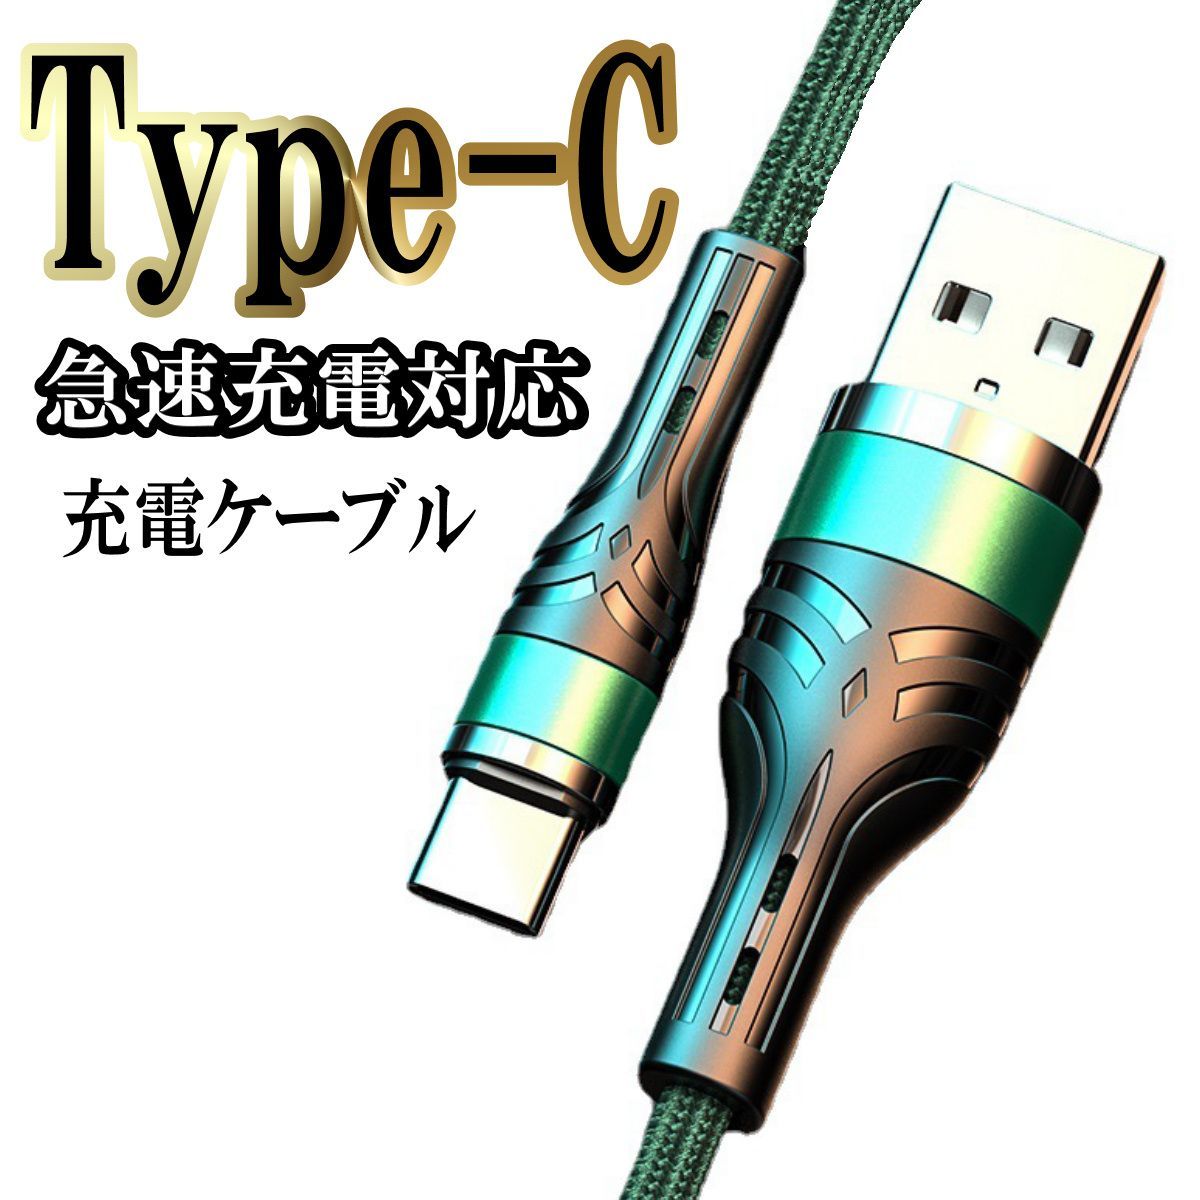 x-2 Type-C タイプC USB-C 急速充電 2本セット 充電ケーブル - 2